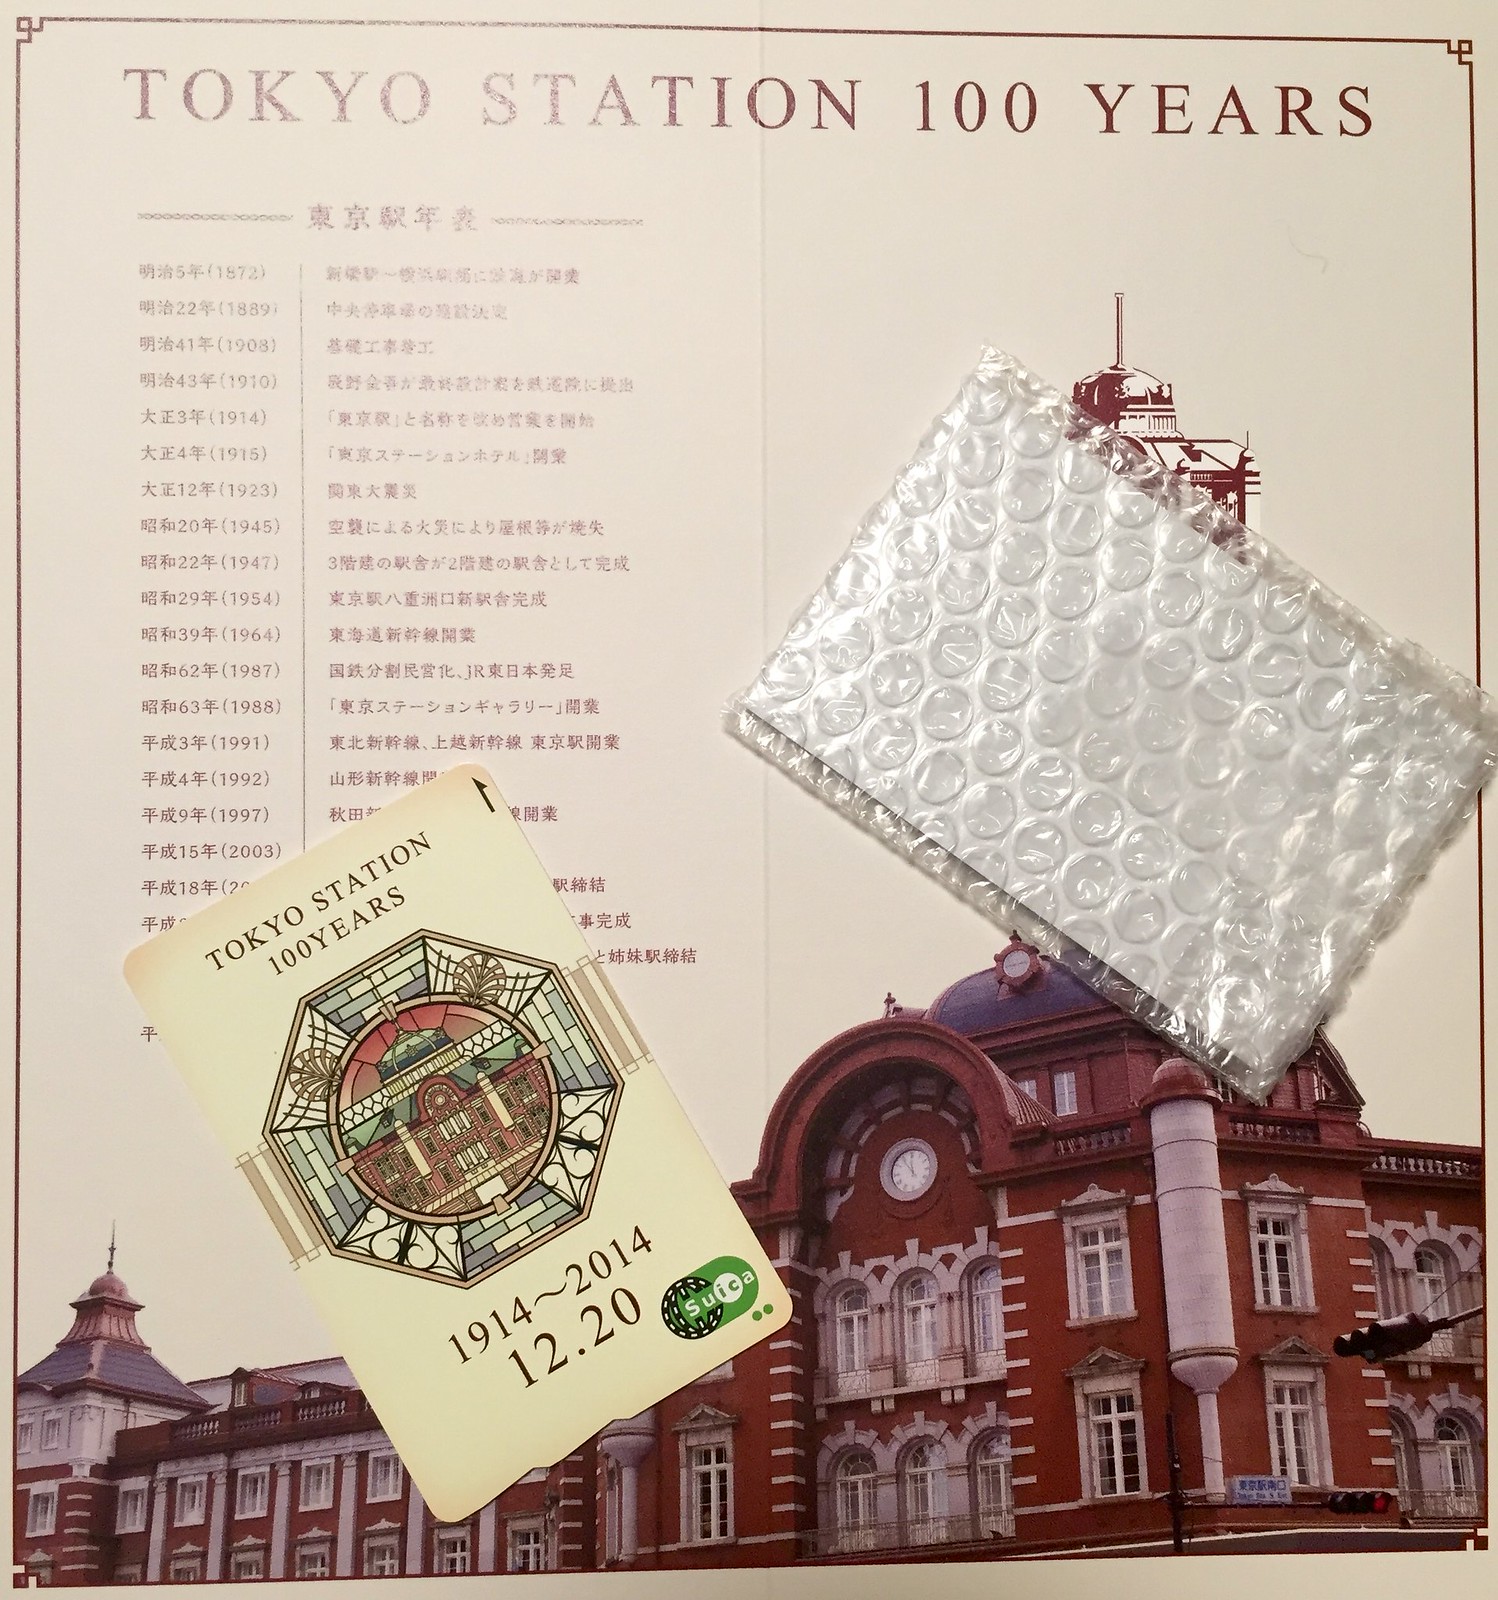 Tokyo Station 100 Year Anniversary Card